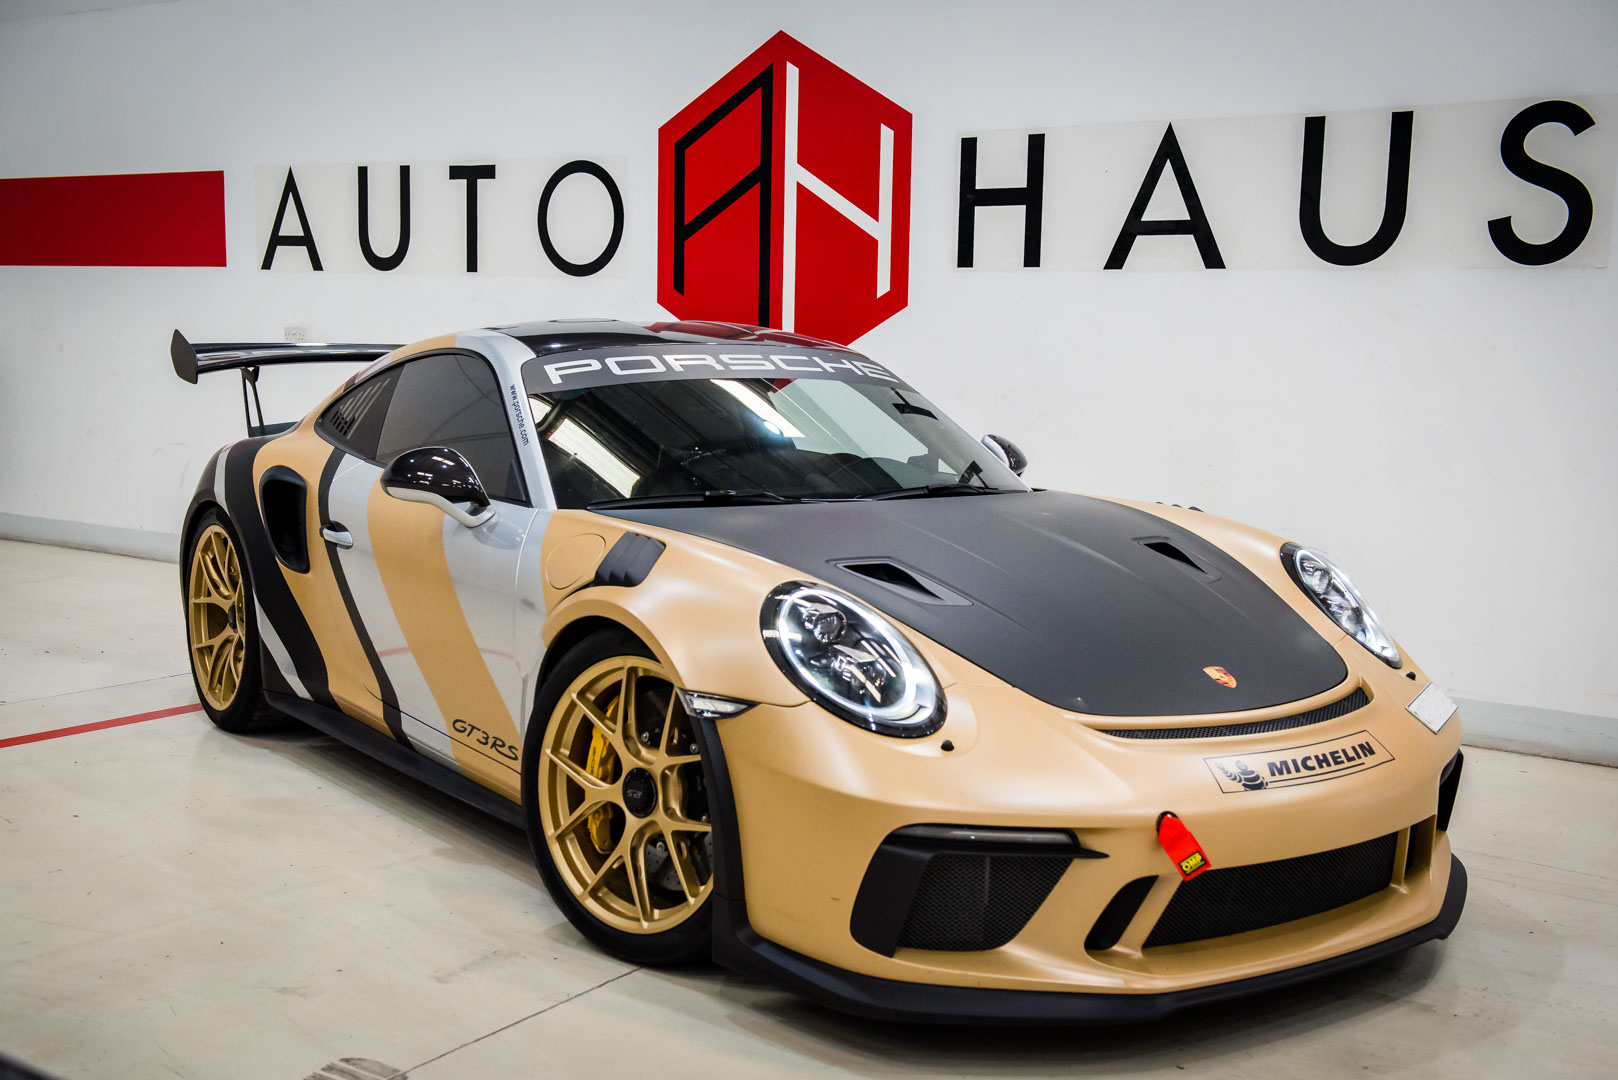 Porsche in Autohaus service centre